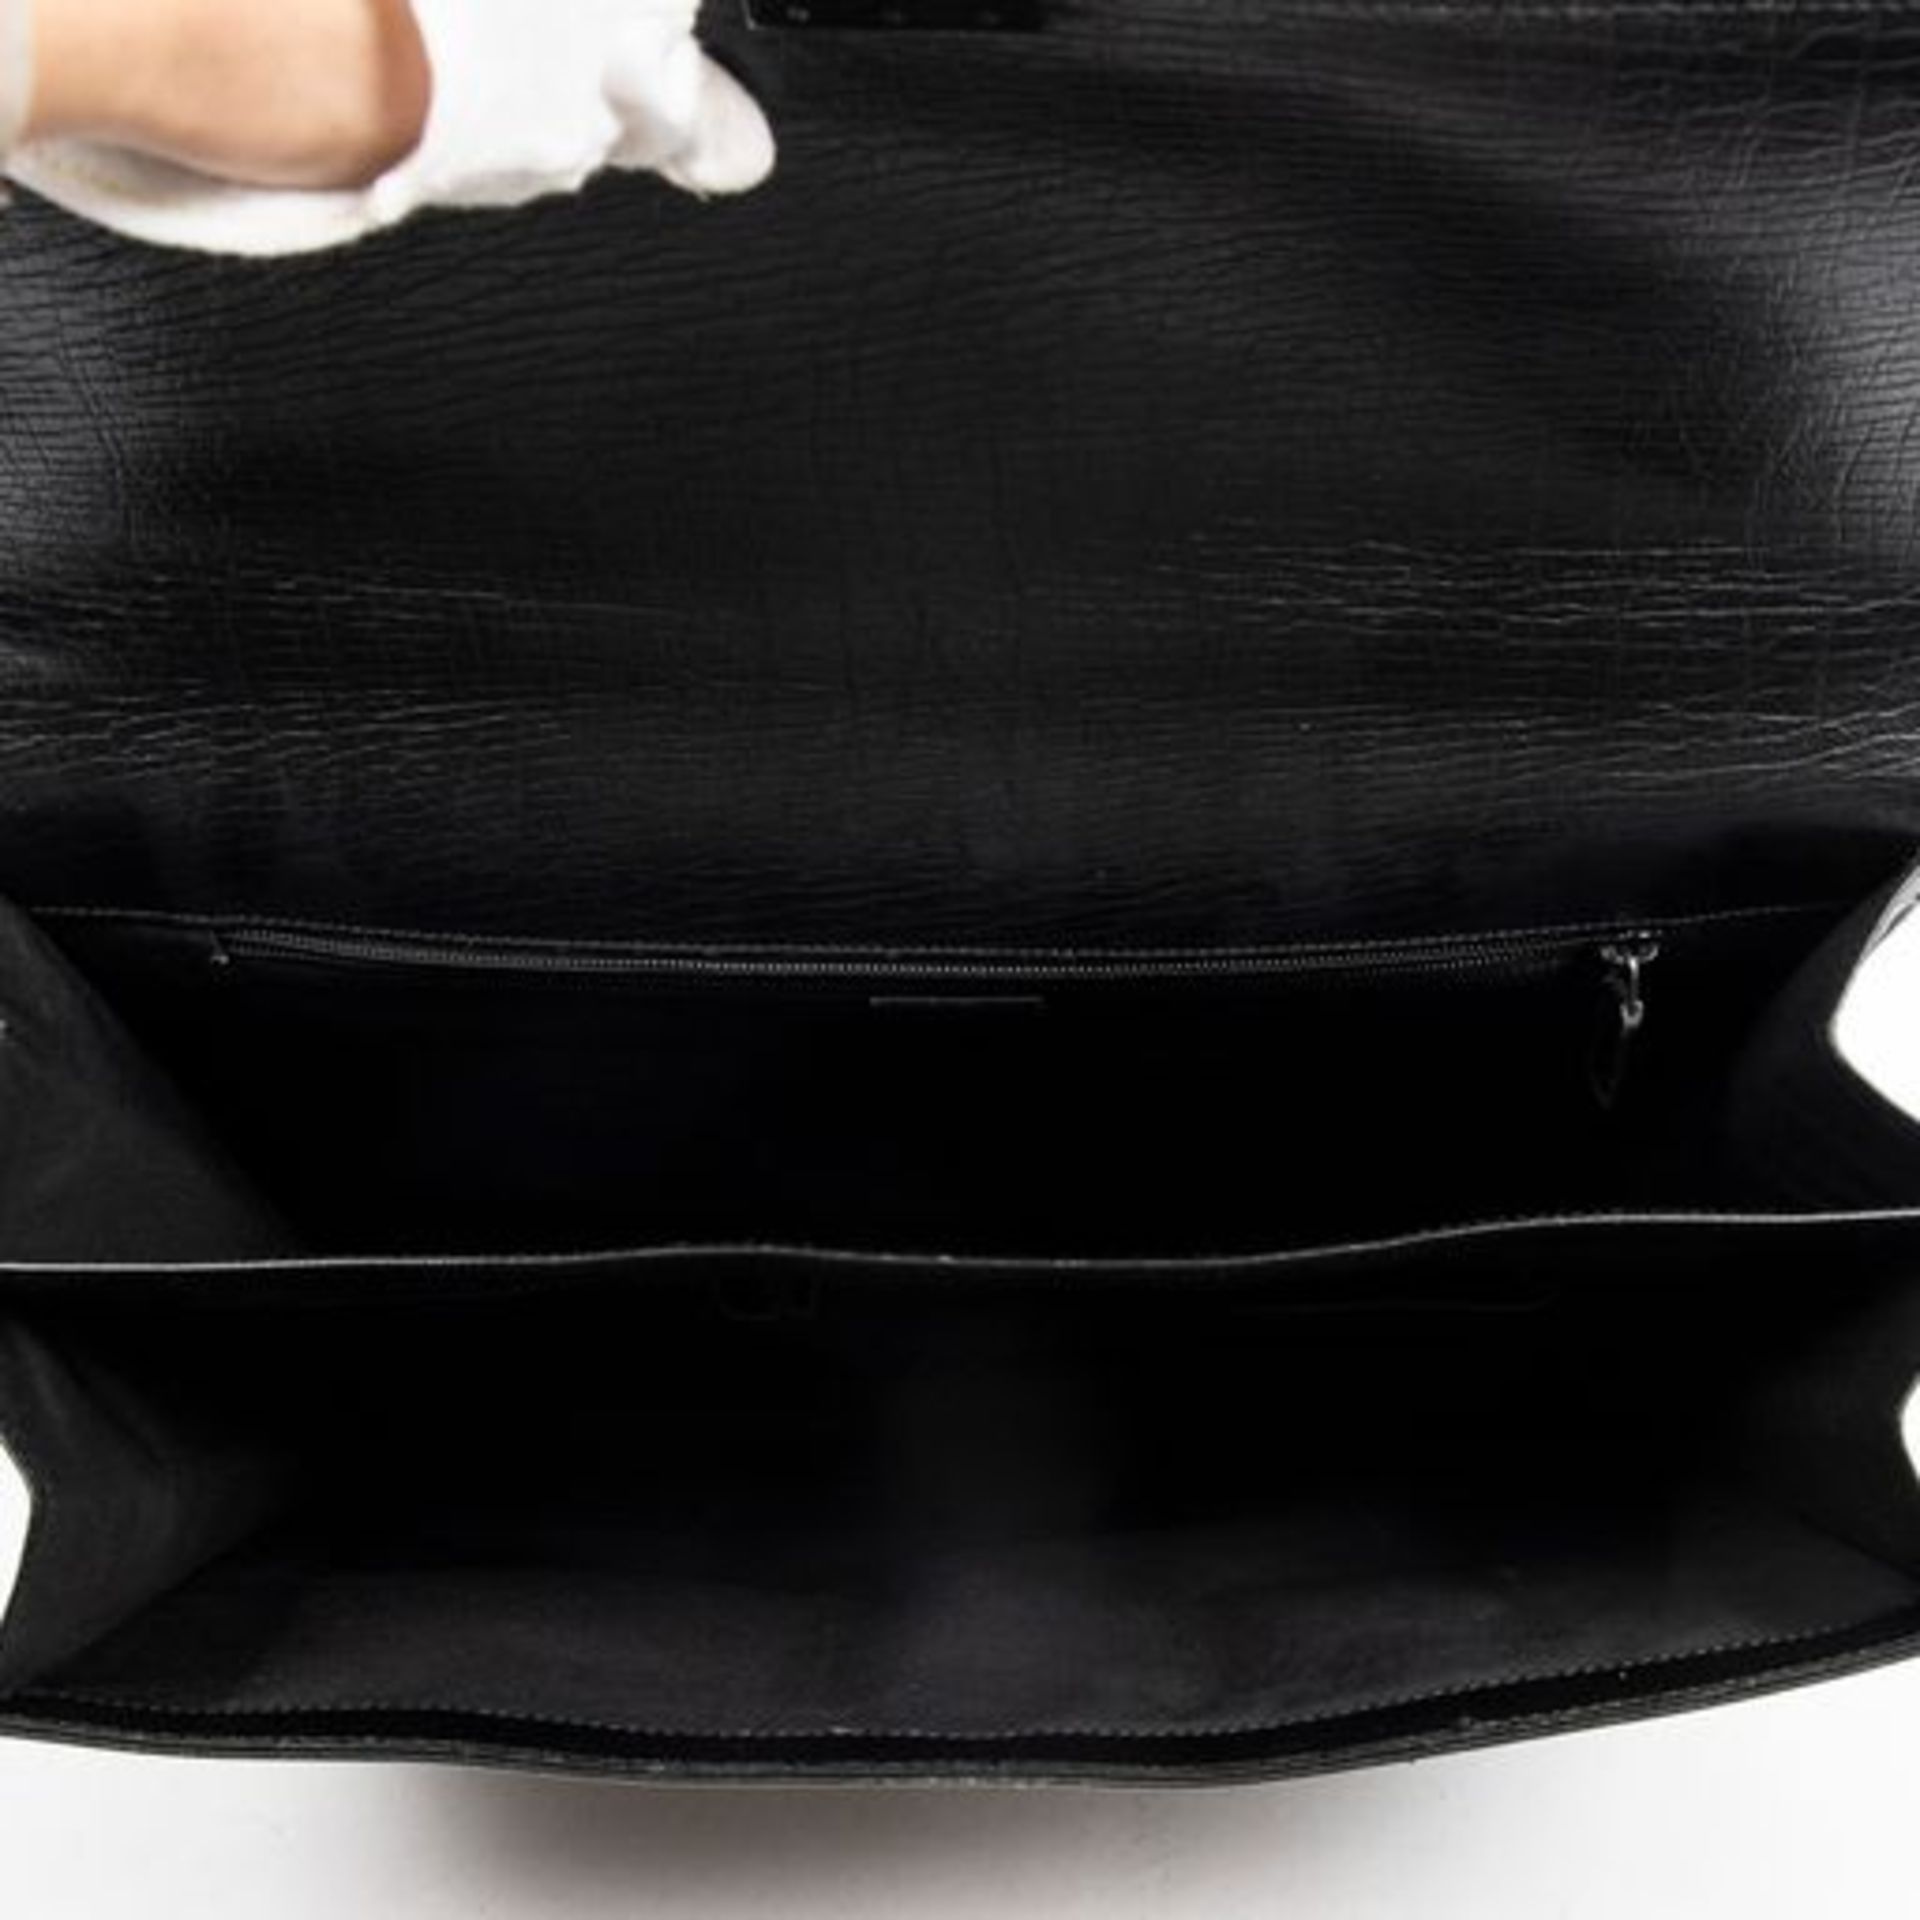 RRP £1070 Gucci Vintage Briefcase Shoulder Bag Black - AAR1391 - Grade A - (Bags Are Not On Site, - Image 2 of 4